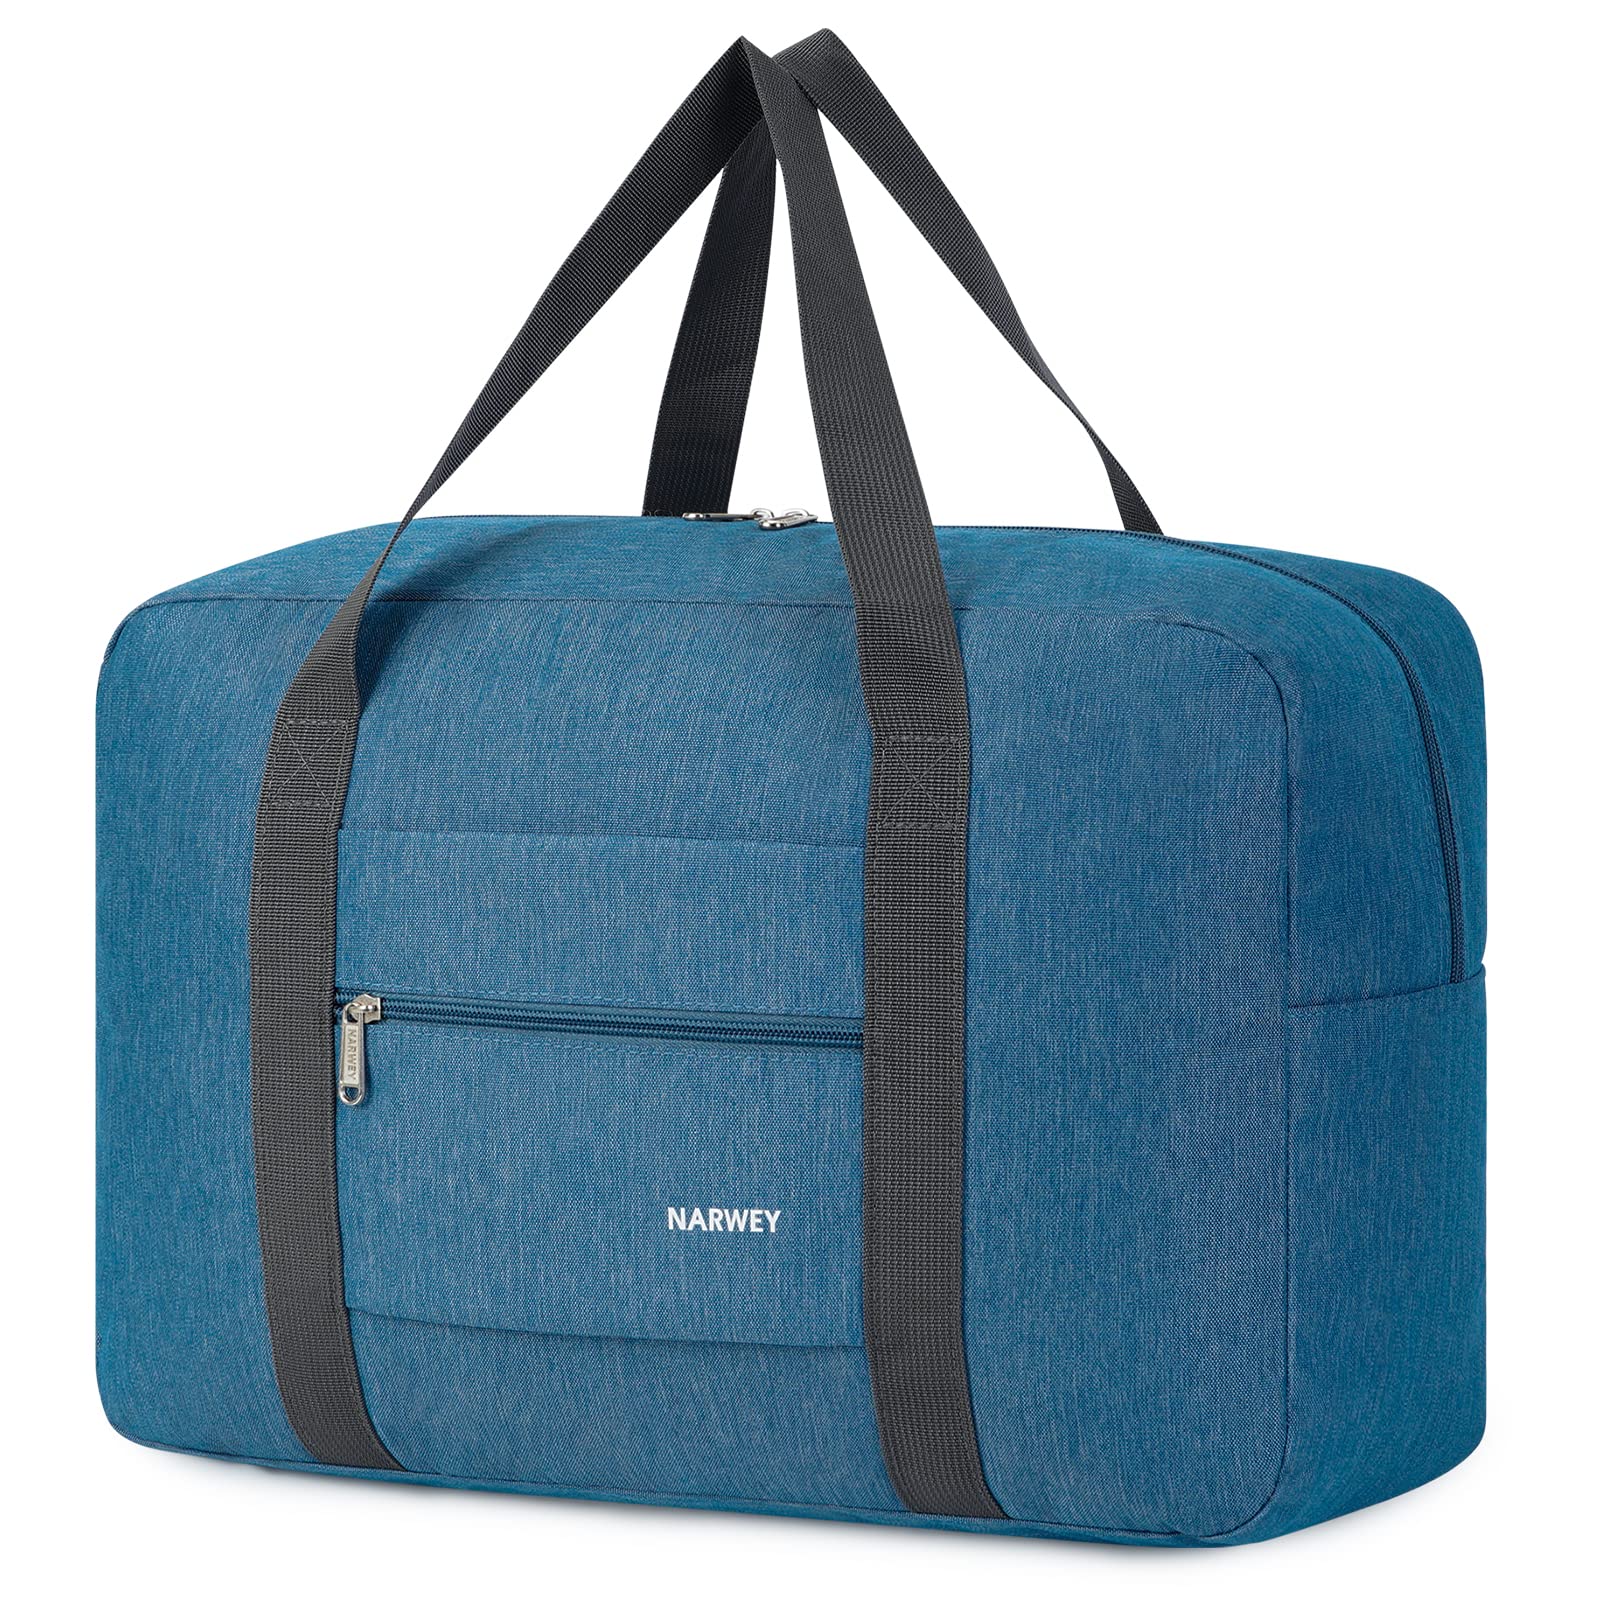 Shop Tanluhu 682 25L Foldable Duffle Bag Trav – Luggage Factory